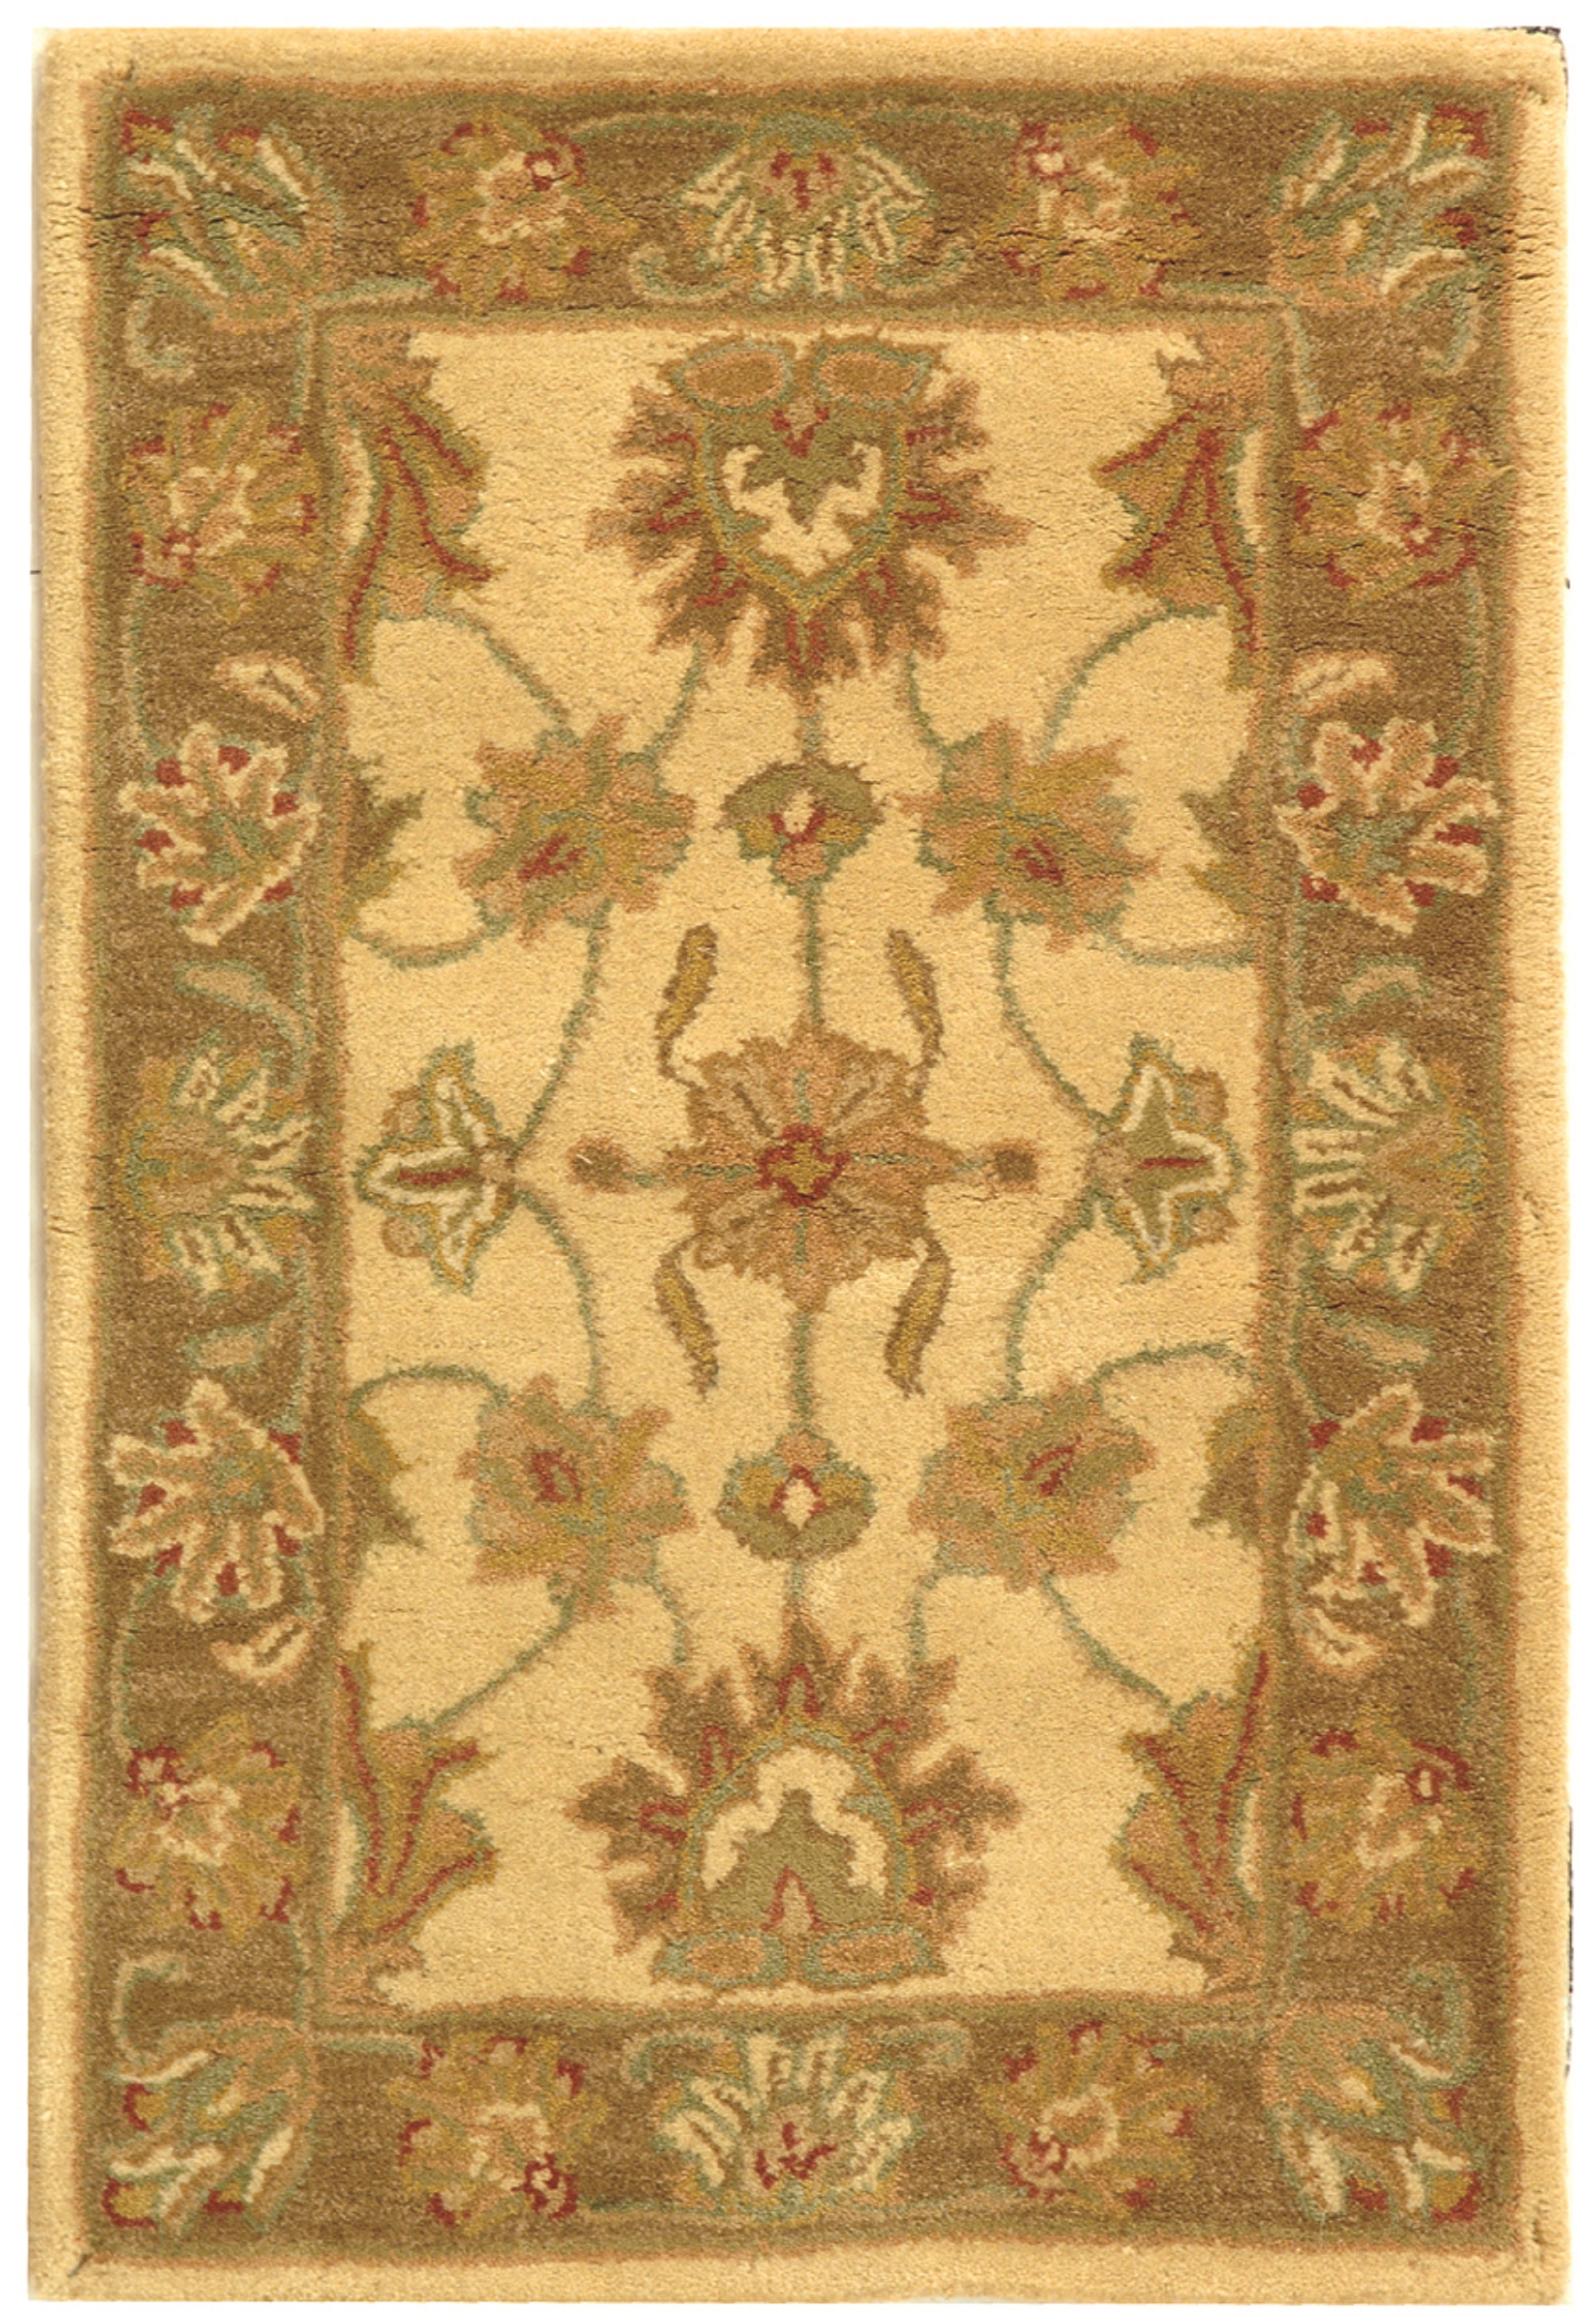 SAFAVIEH Heritage Regis Traditional Wool Area Rug, Ivory/Brown, 2'3" x 4' - image 1 of 9